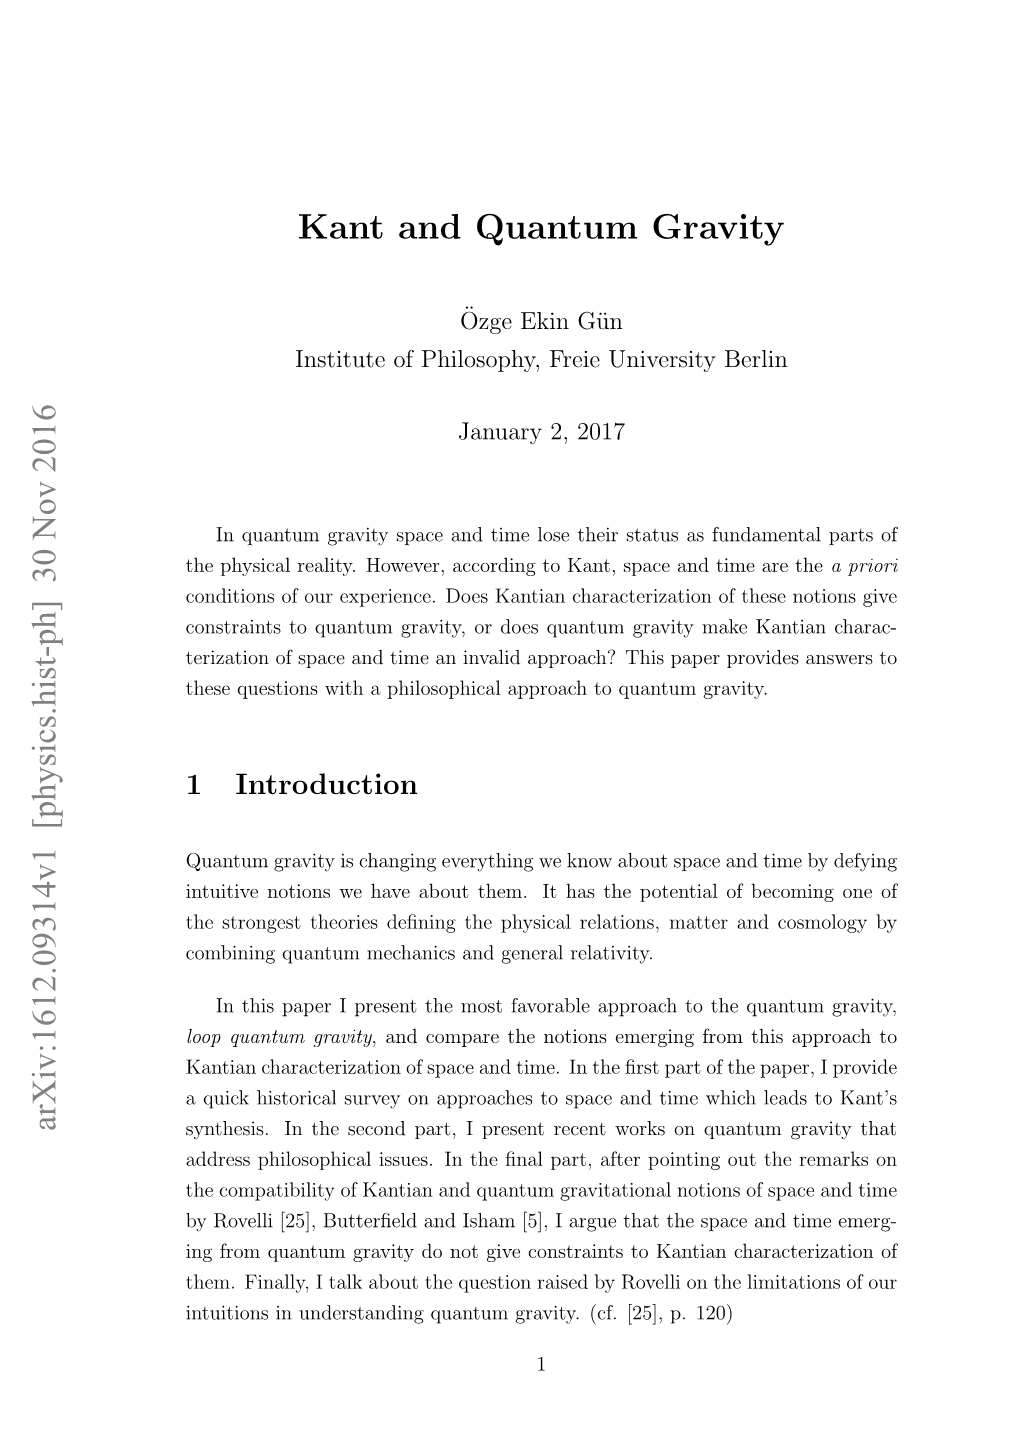 Kant and Quantum Gravity Arxiv:1612.09314V1 [Physics.Hist-Ph]